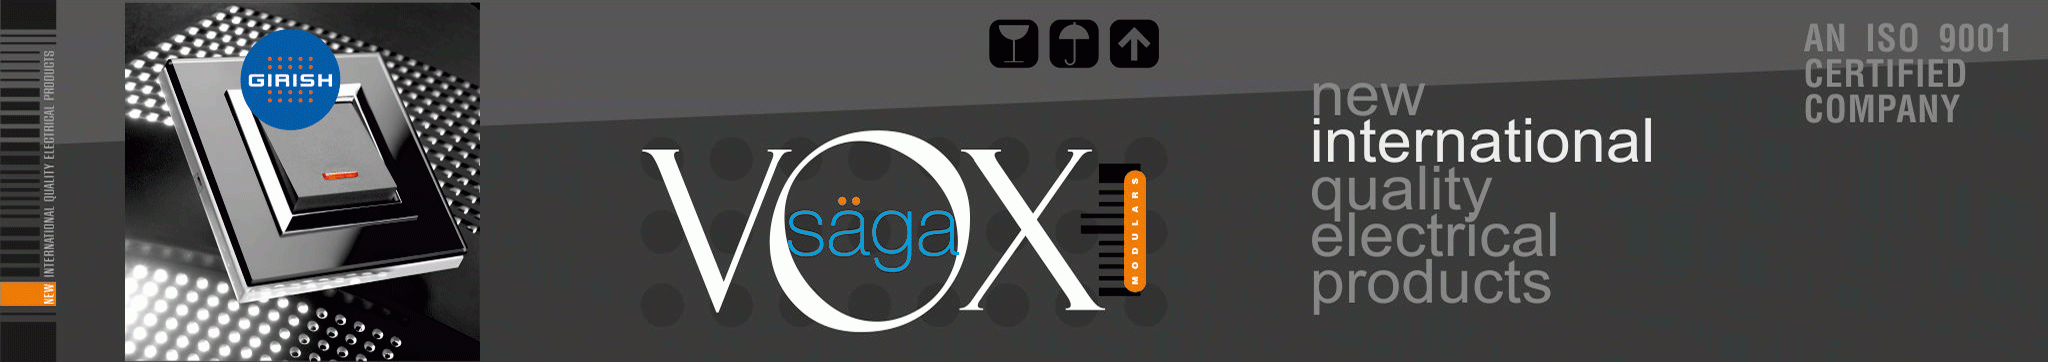 Vox-Saga-Outer-Plate